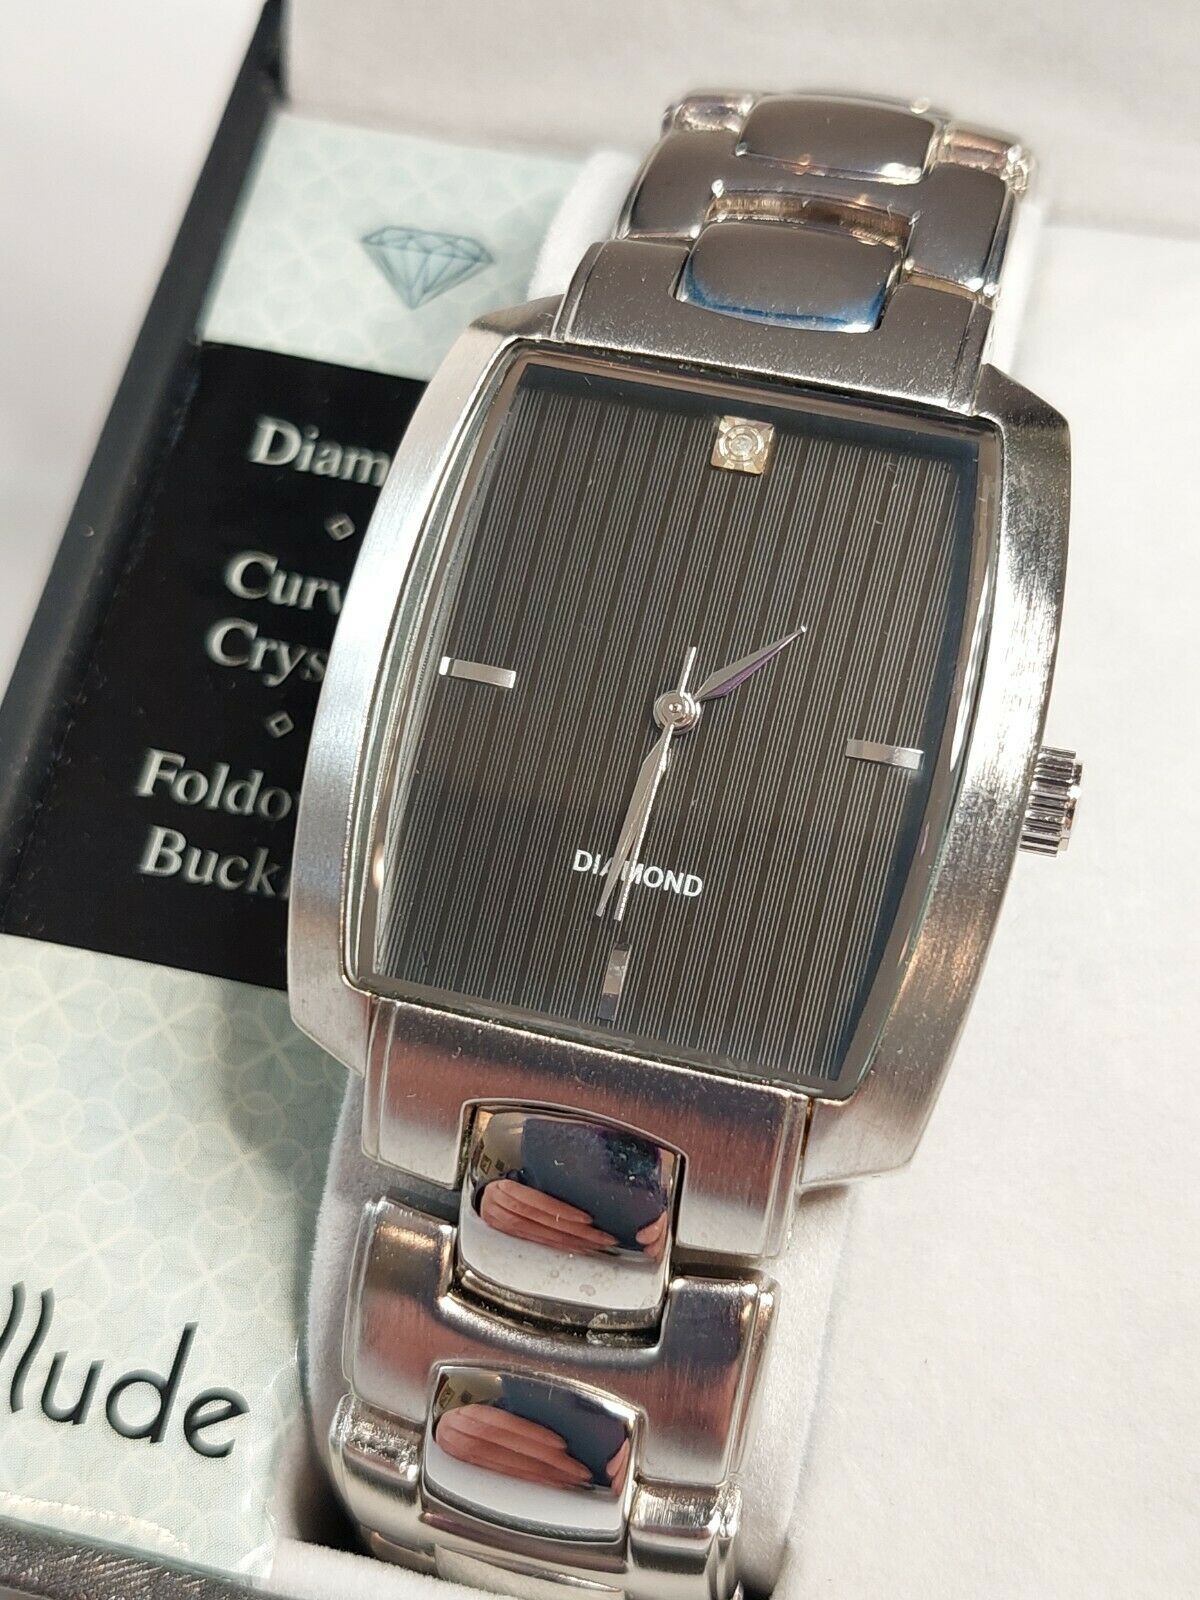 ALLUDE DIAMOND MEN'S Quartz Watch FMDAL384 Silver Tone Black Face New  Battery $14.99 - PicClick